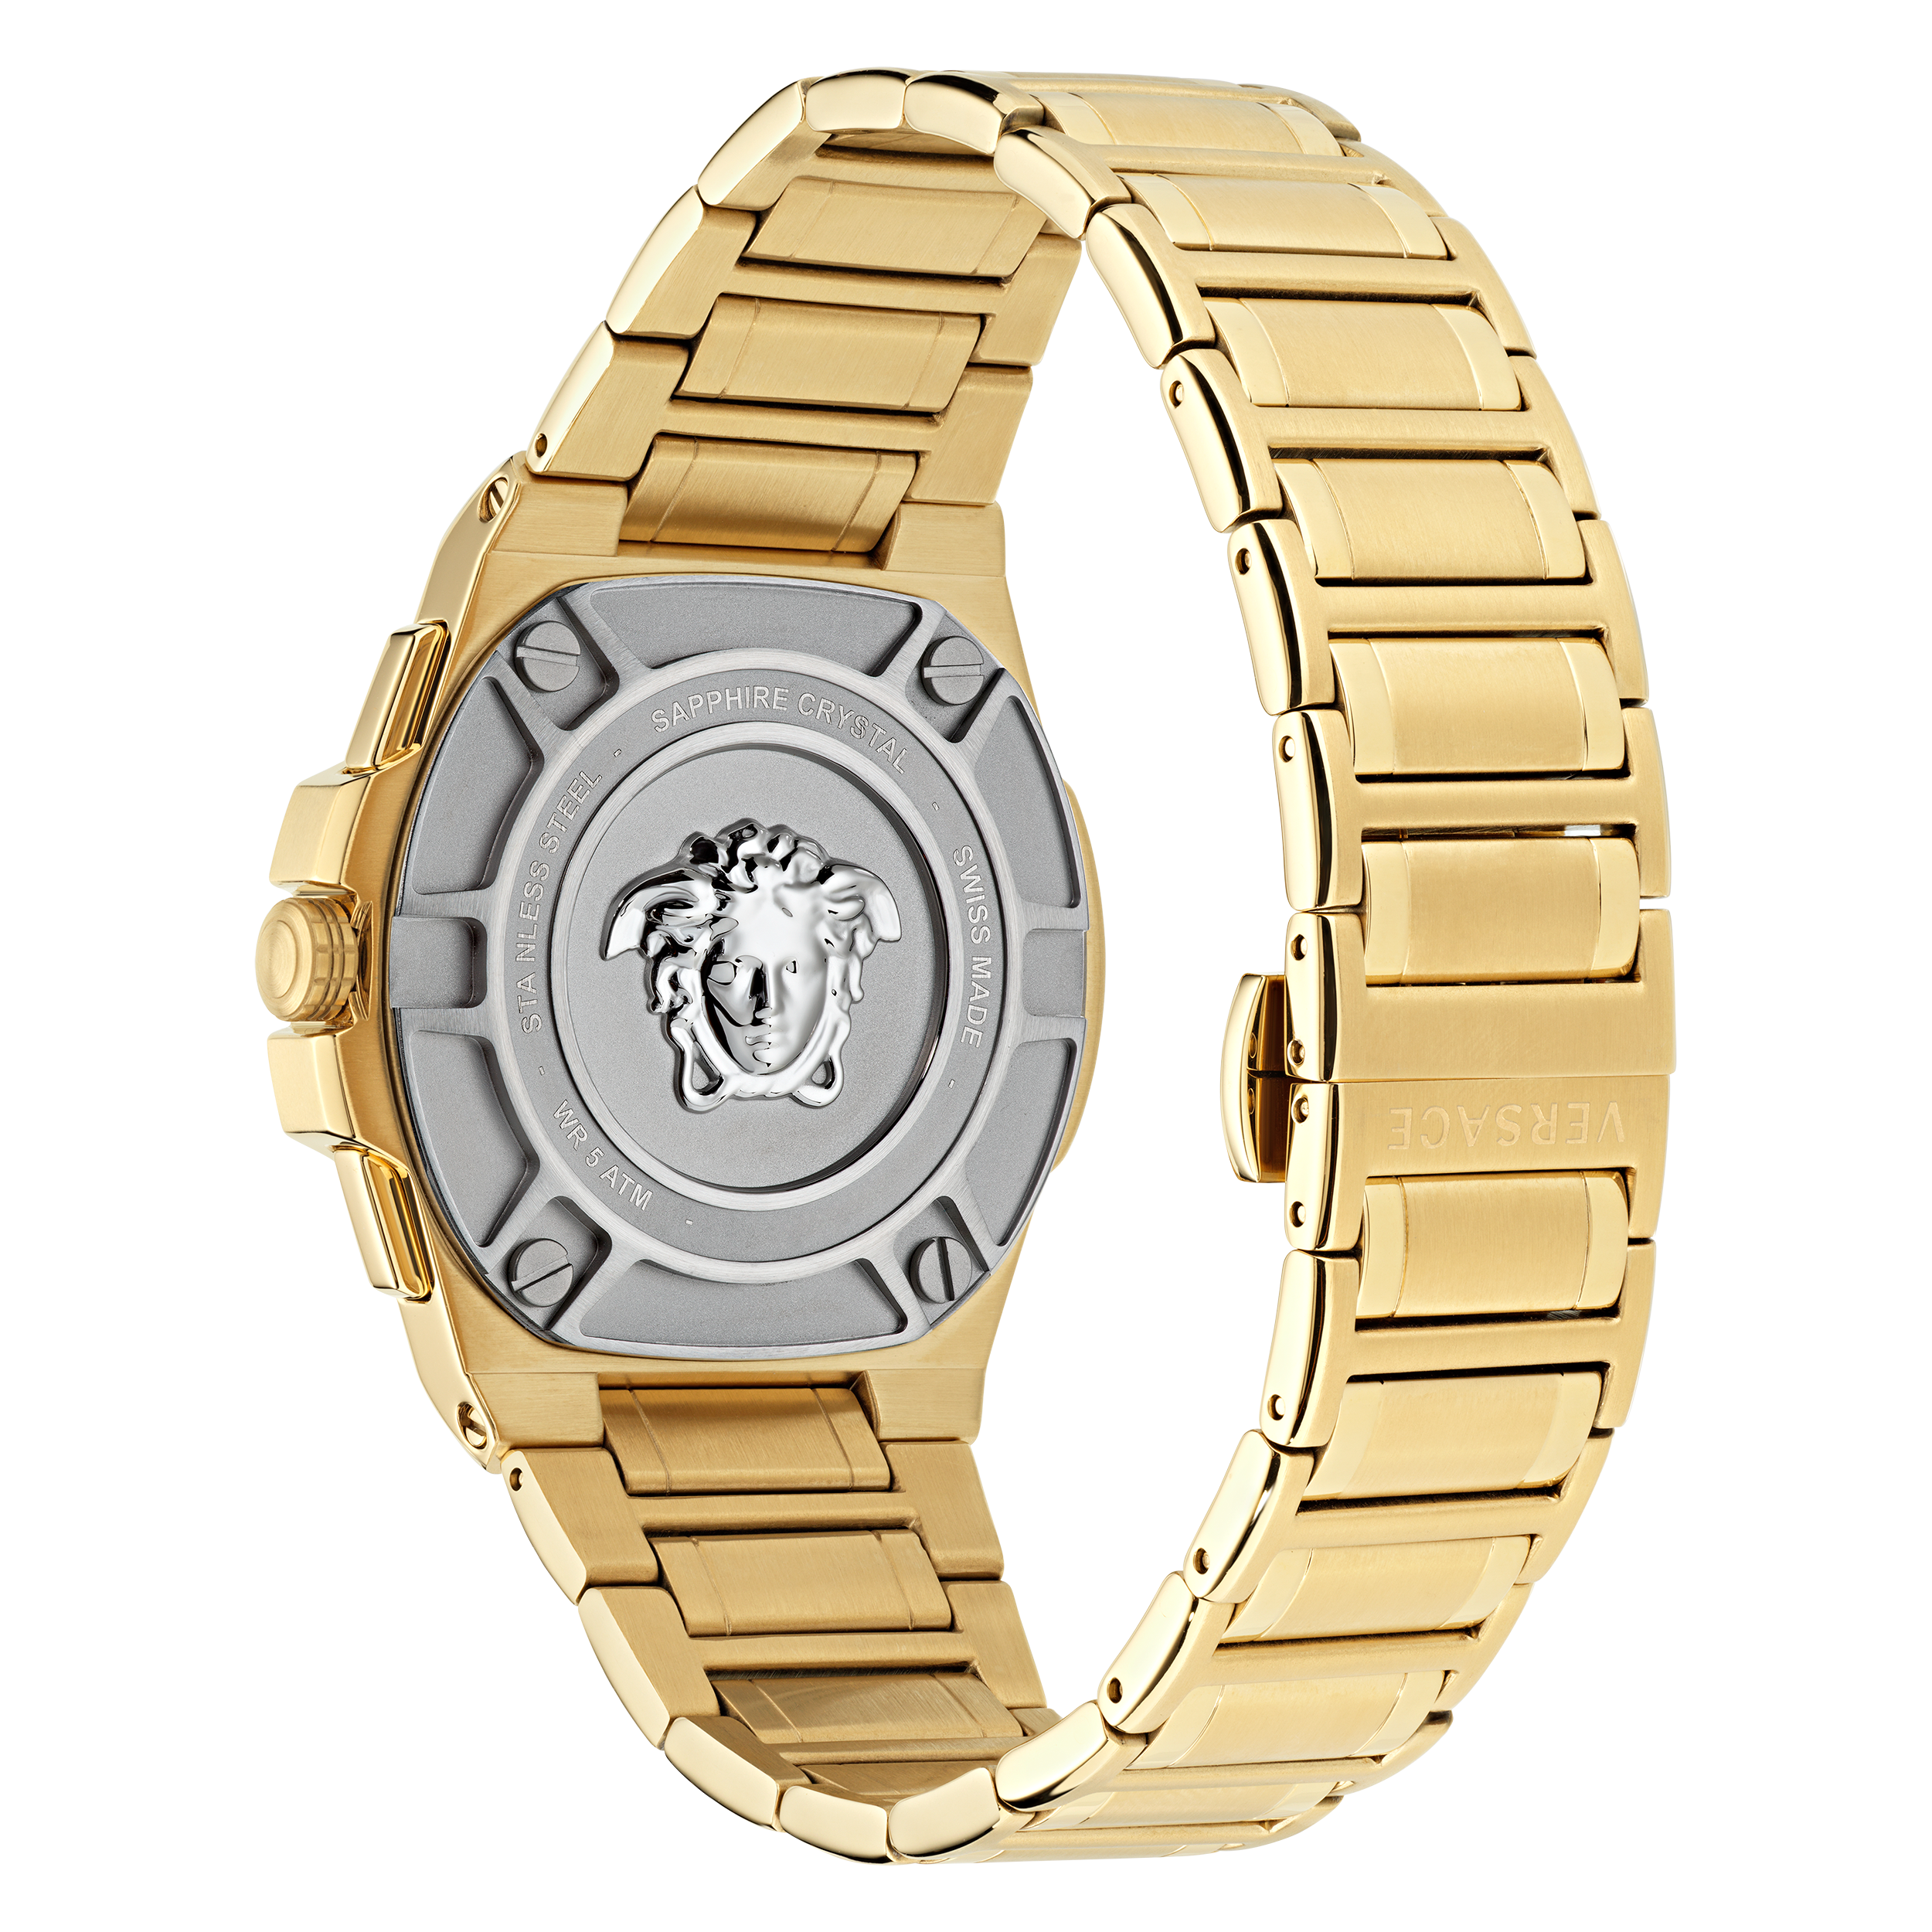 Versace Gold Mens Chronograph Watch Greca Extreme Chrono VE7H00623